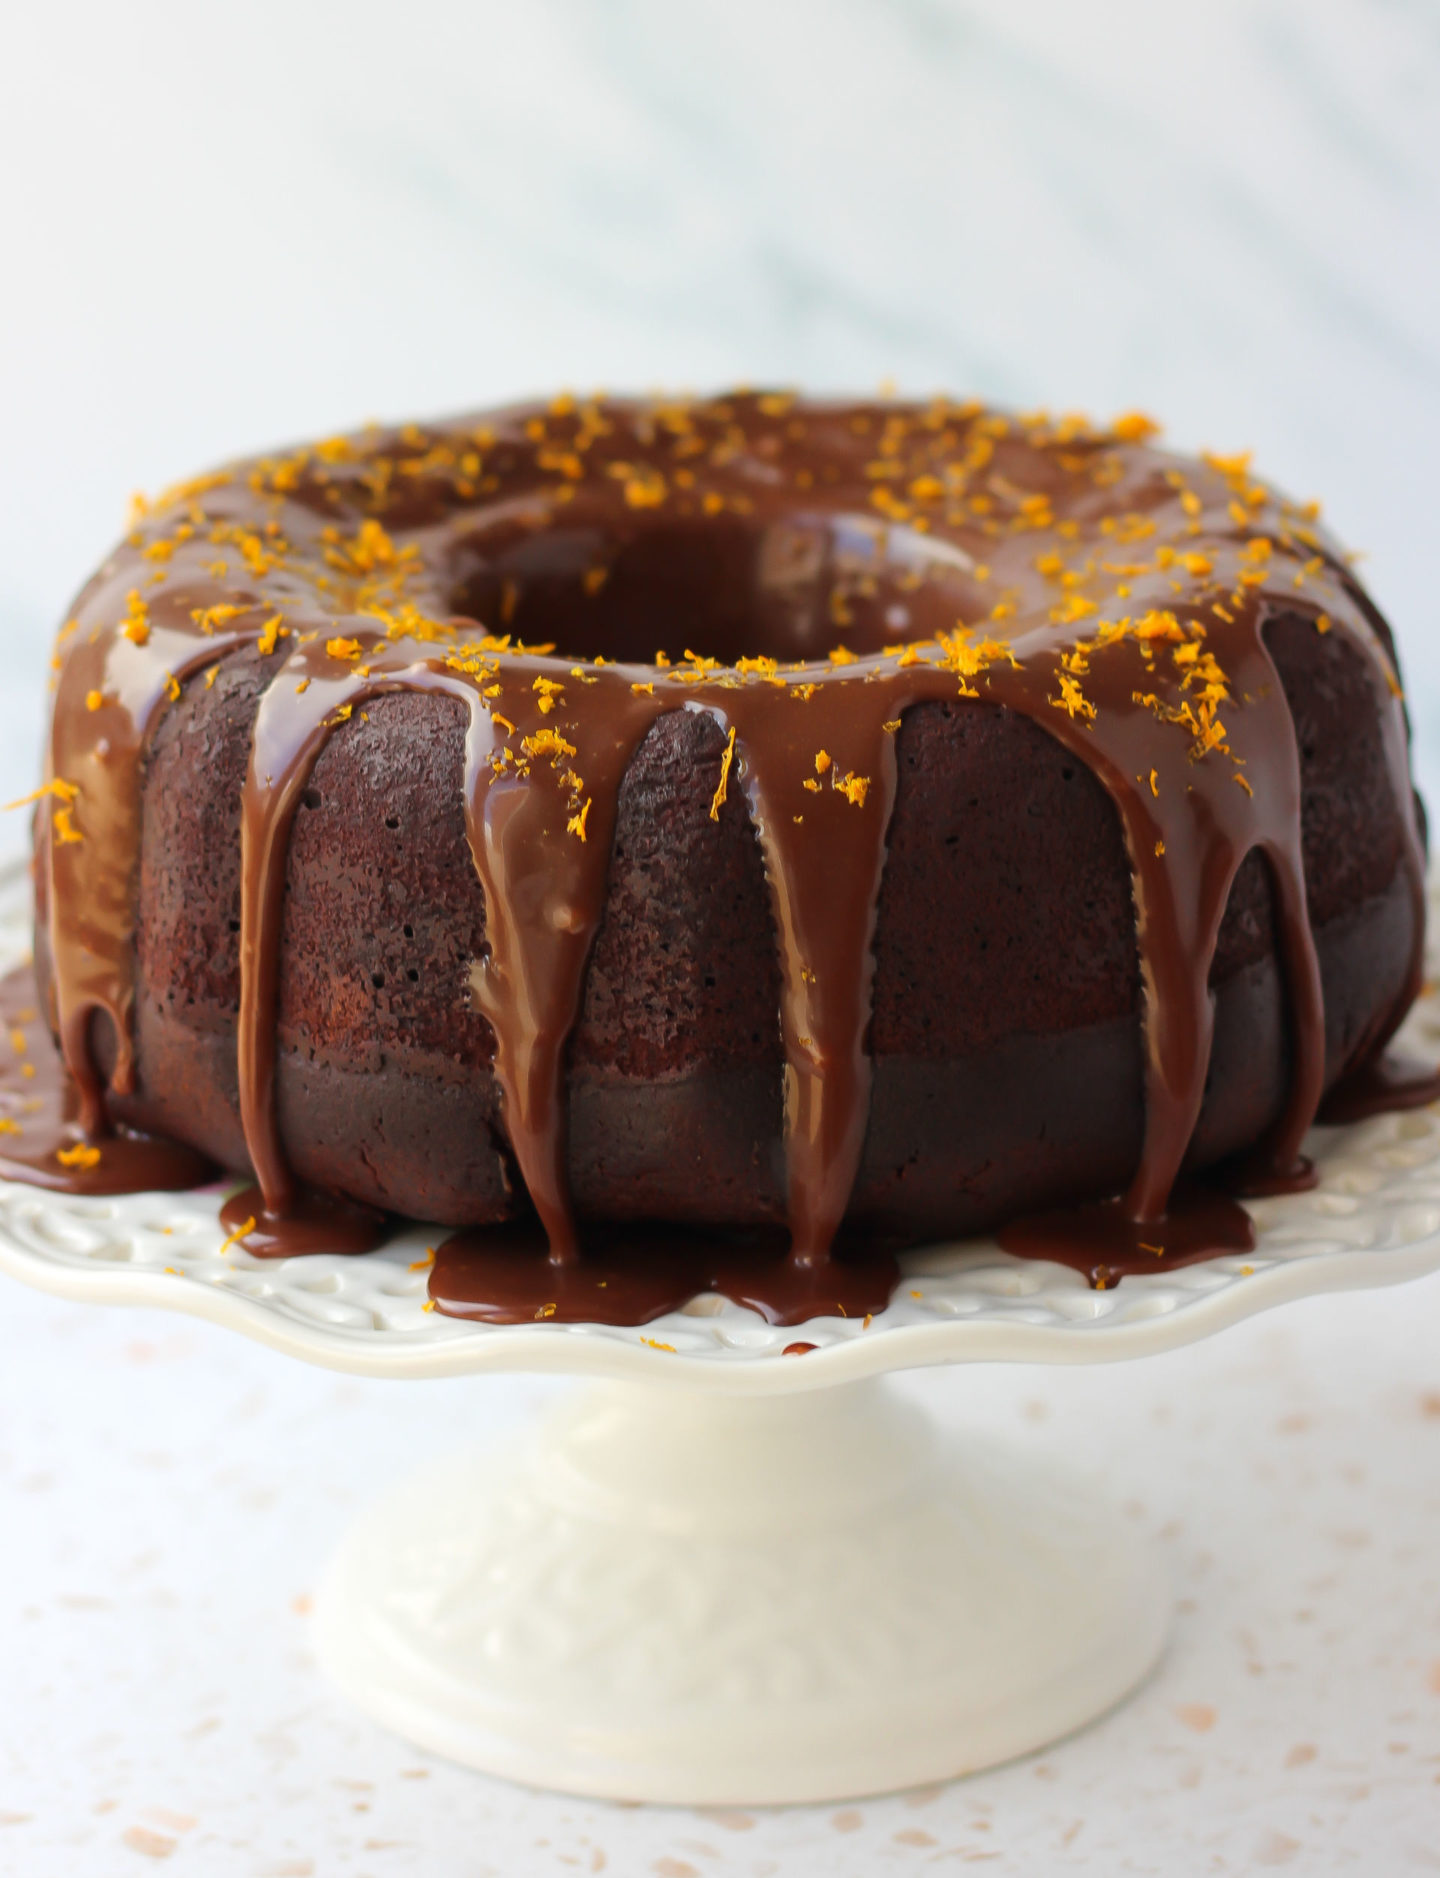 Whole chocolate orange Bundt cake with chocolate orange ganache glaze